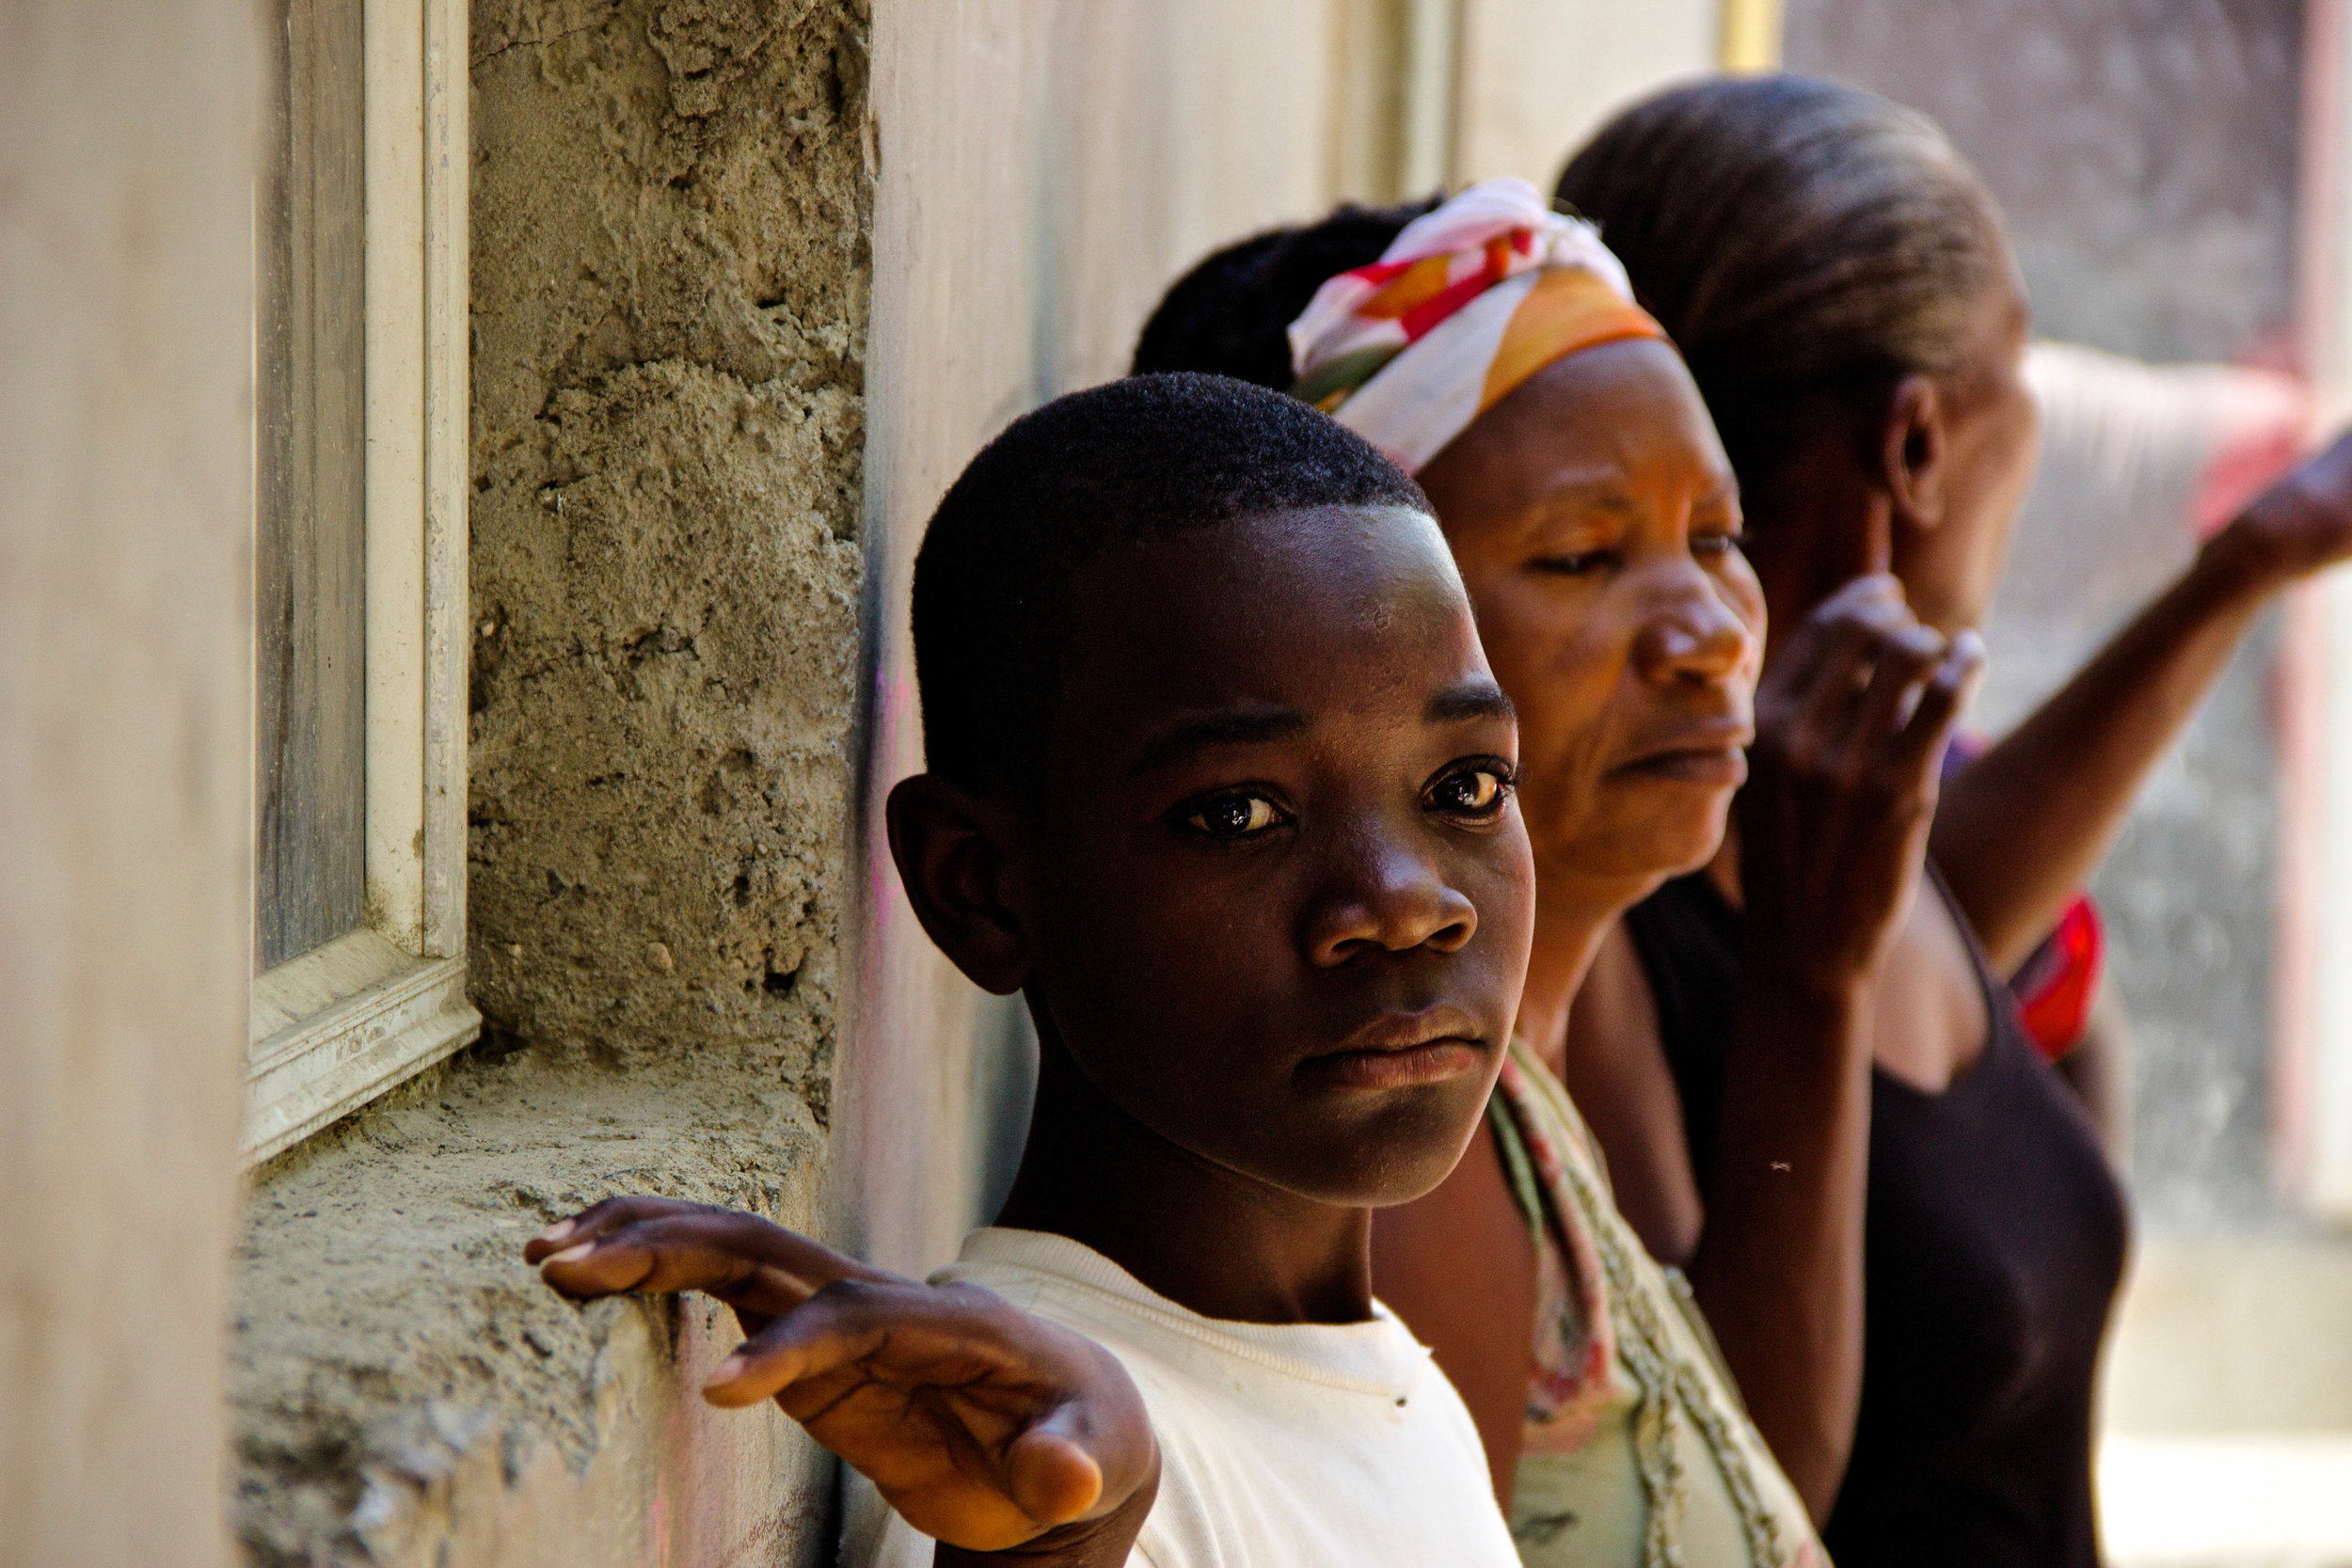 JacobGrantPhotography_Portraits, Haitian Boy